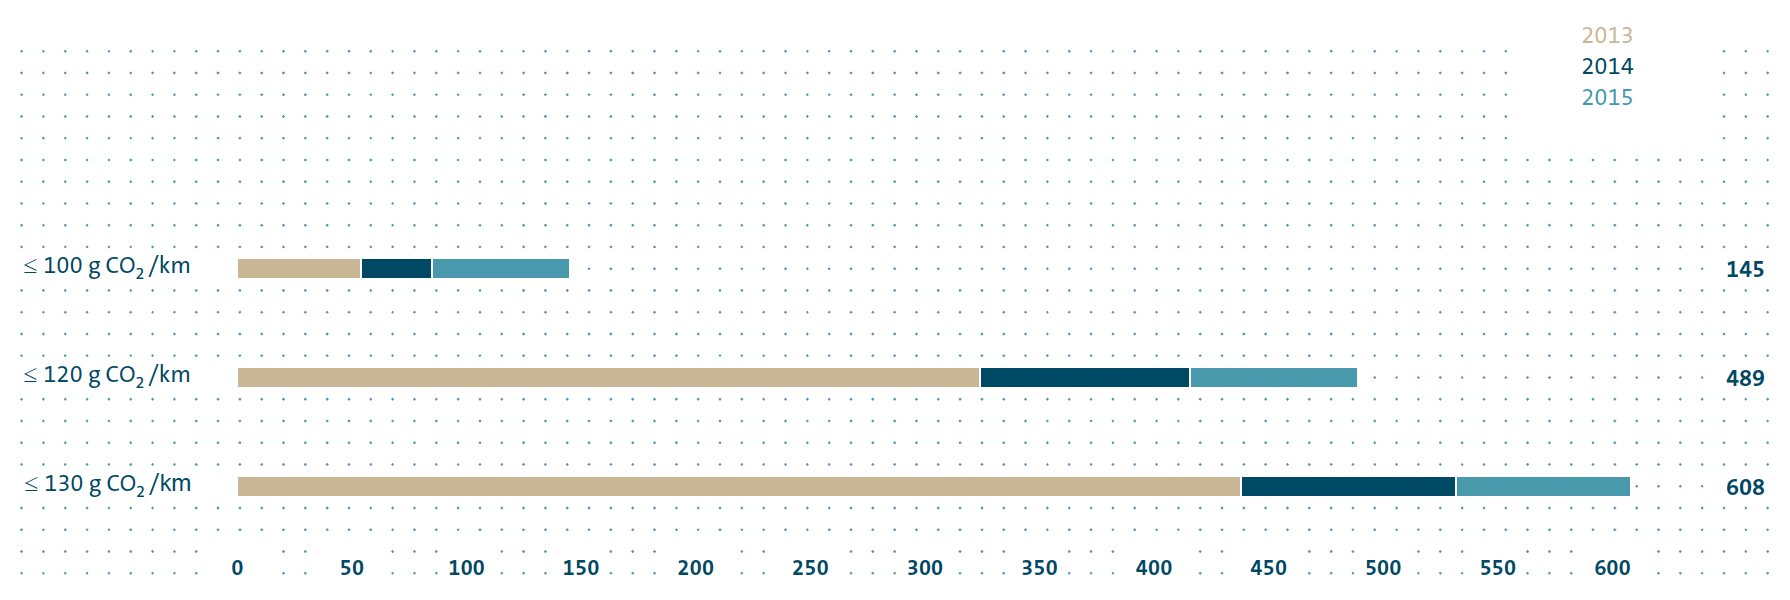 CO2 emission - Status quo (bar chart)